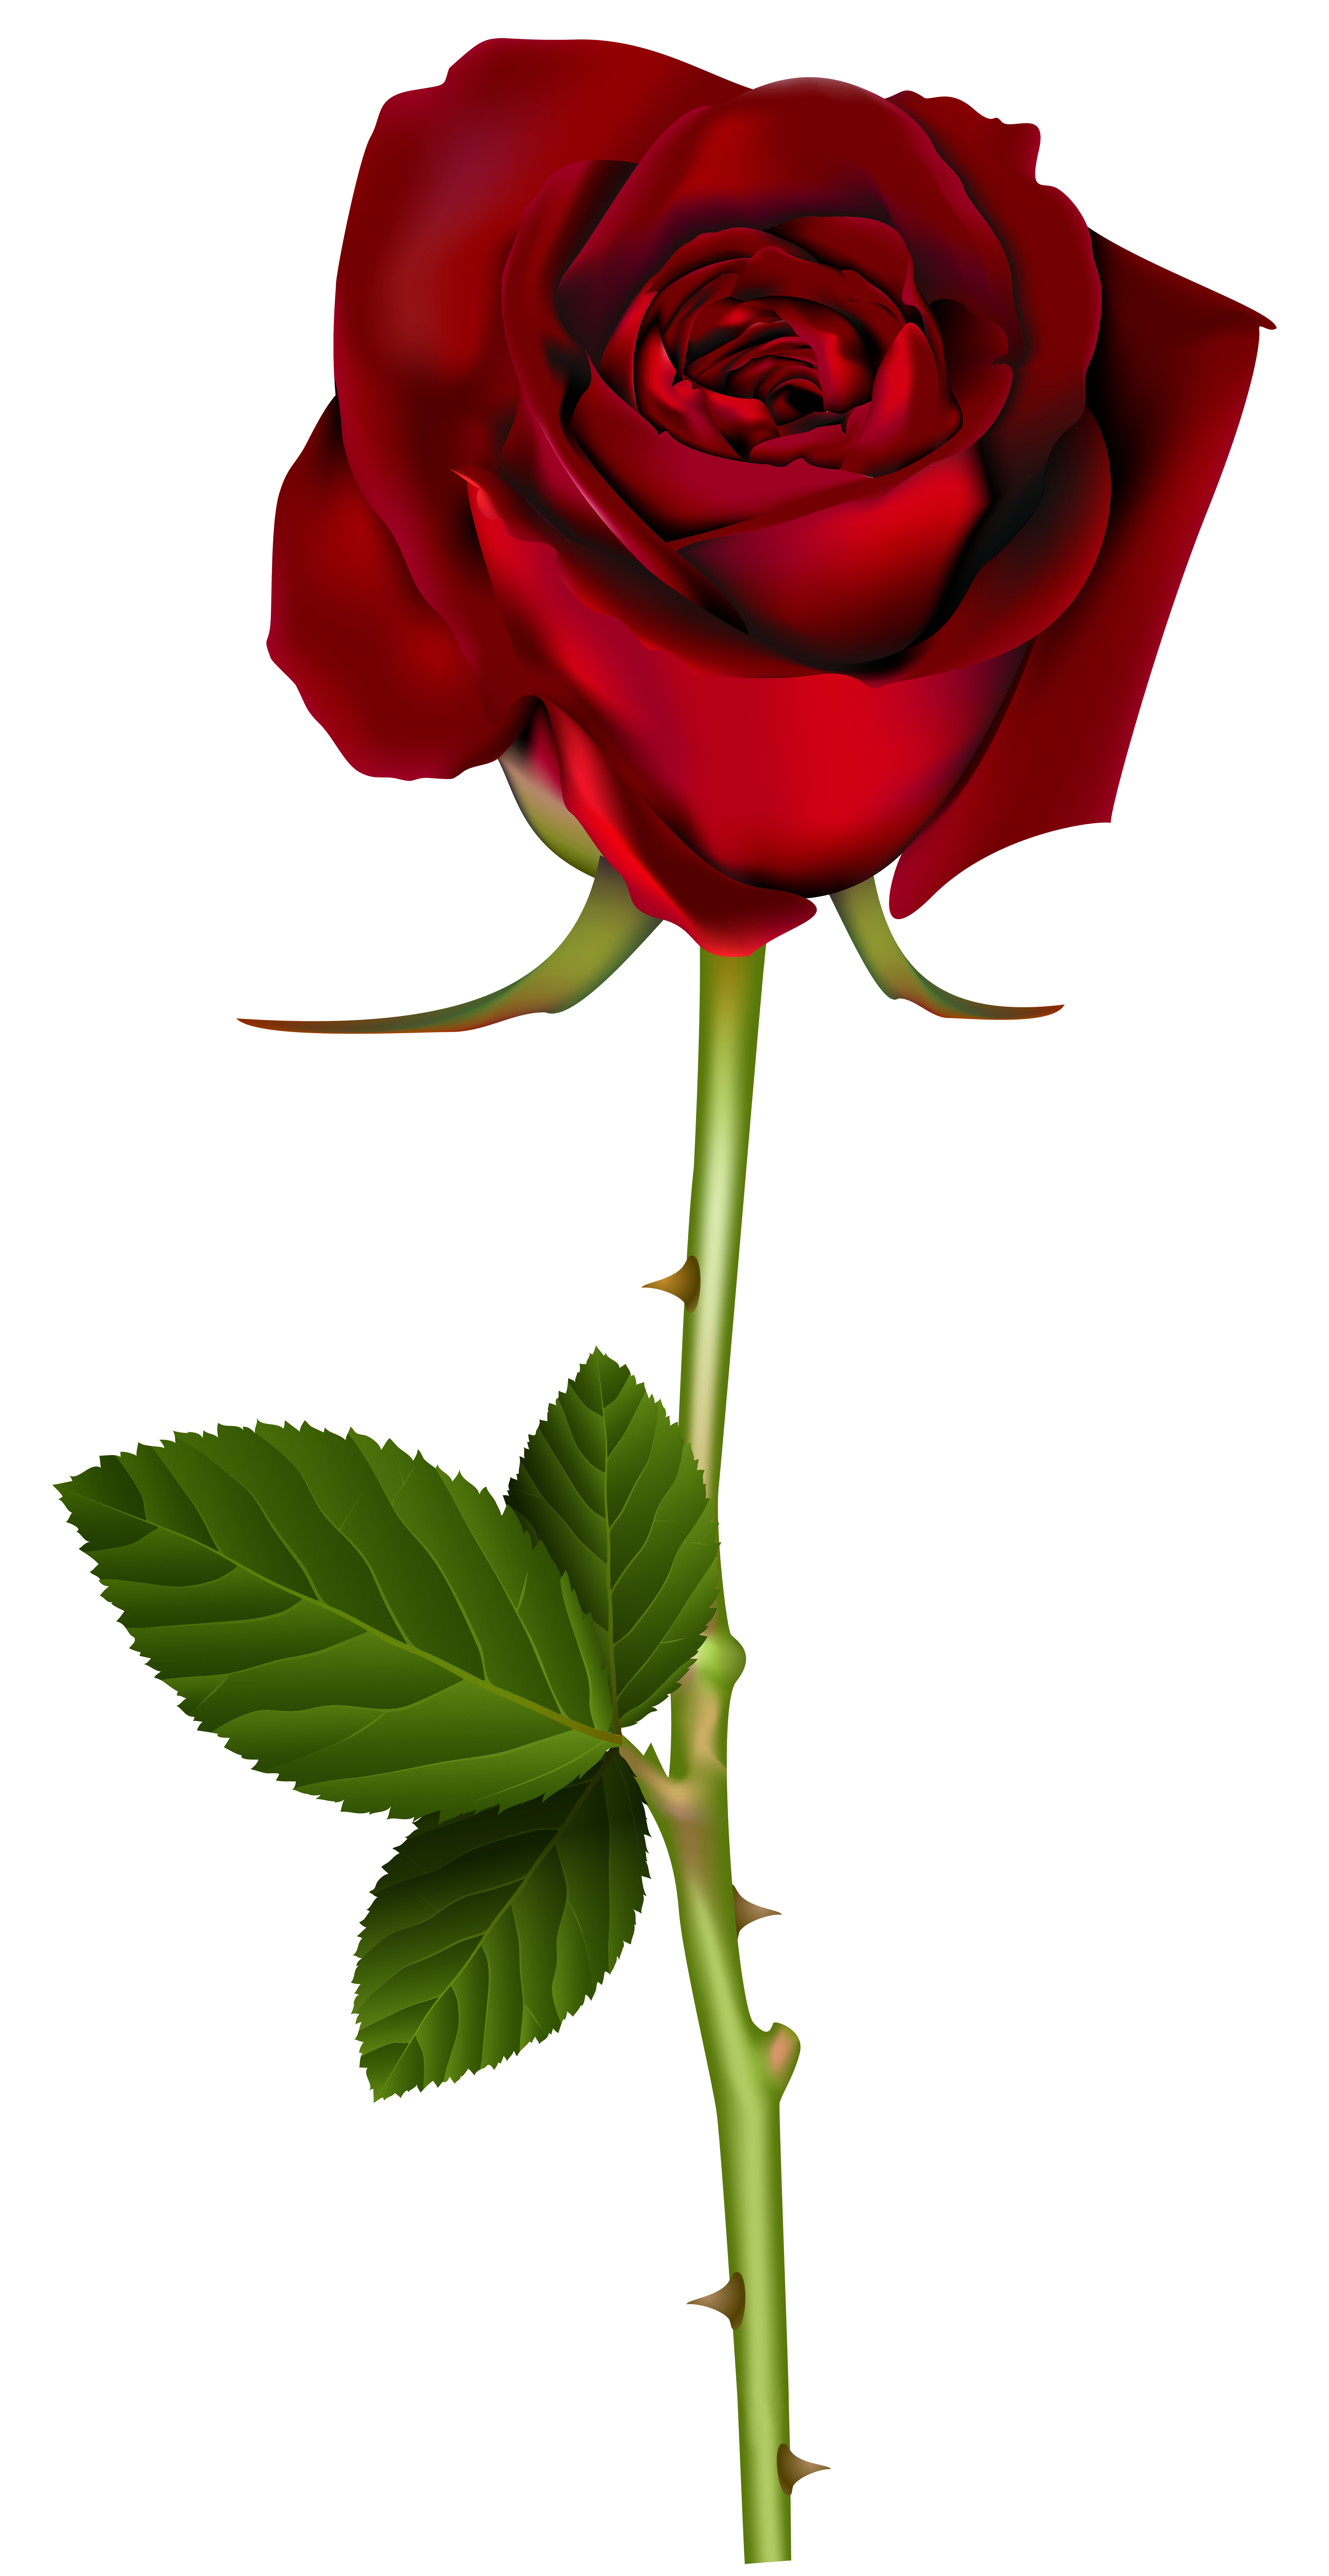 Red rose image gallery. Flower png transparent